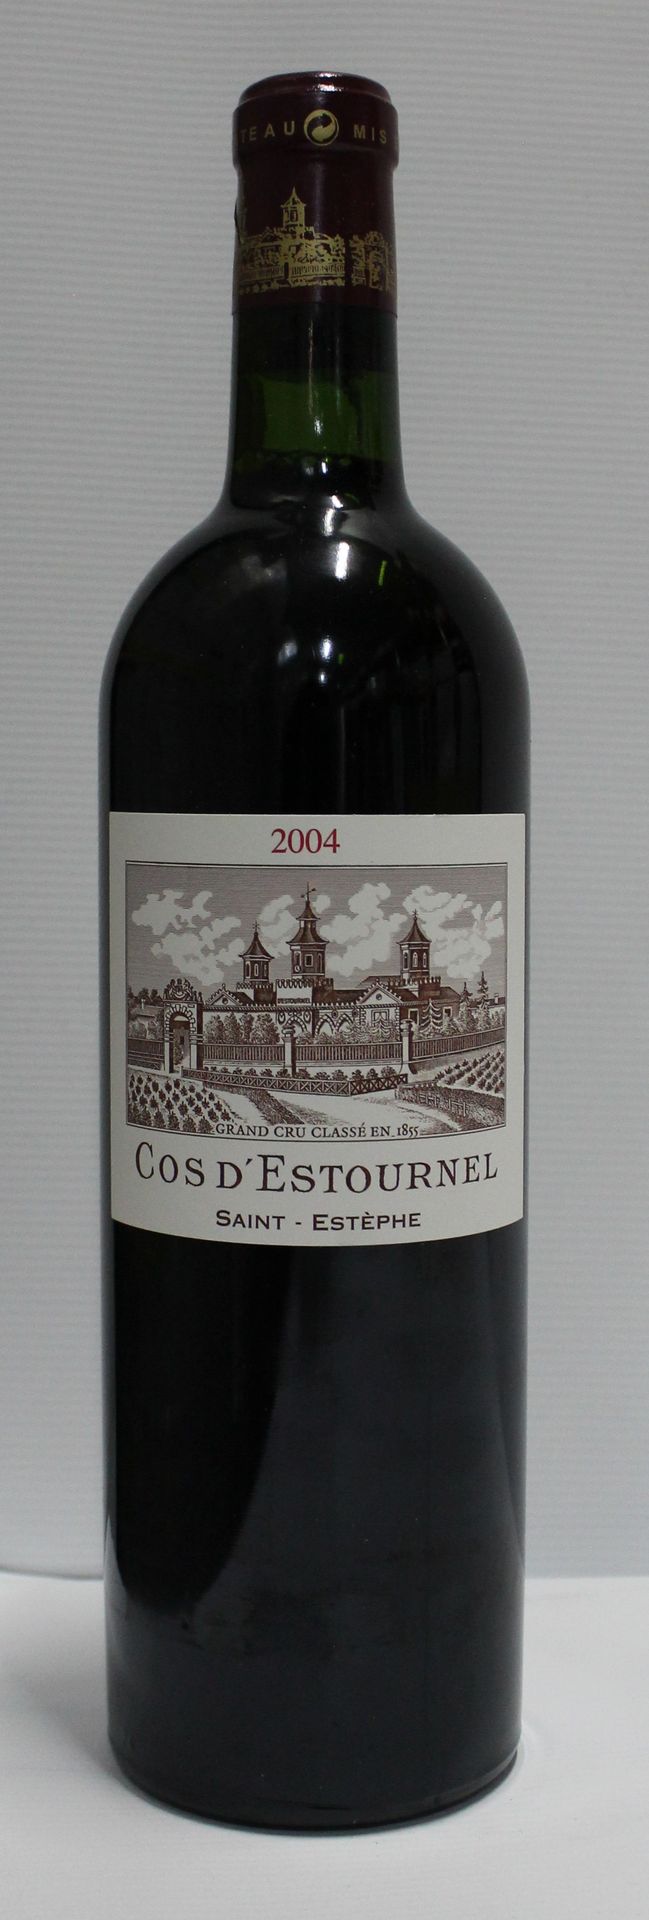 Null 1瓶75cl - 圣埃斯泰夫二级酒庄 - 爱士图尔酒庄 - 2004年红葡萄酒

瓶身完美保存，温度理想。